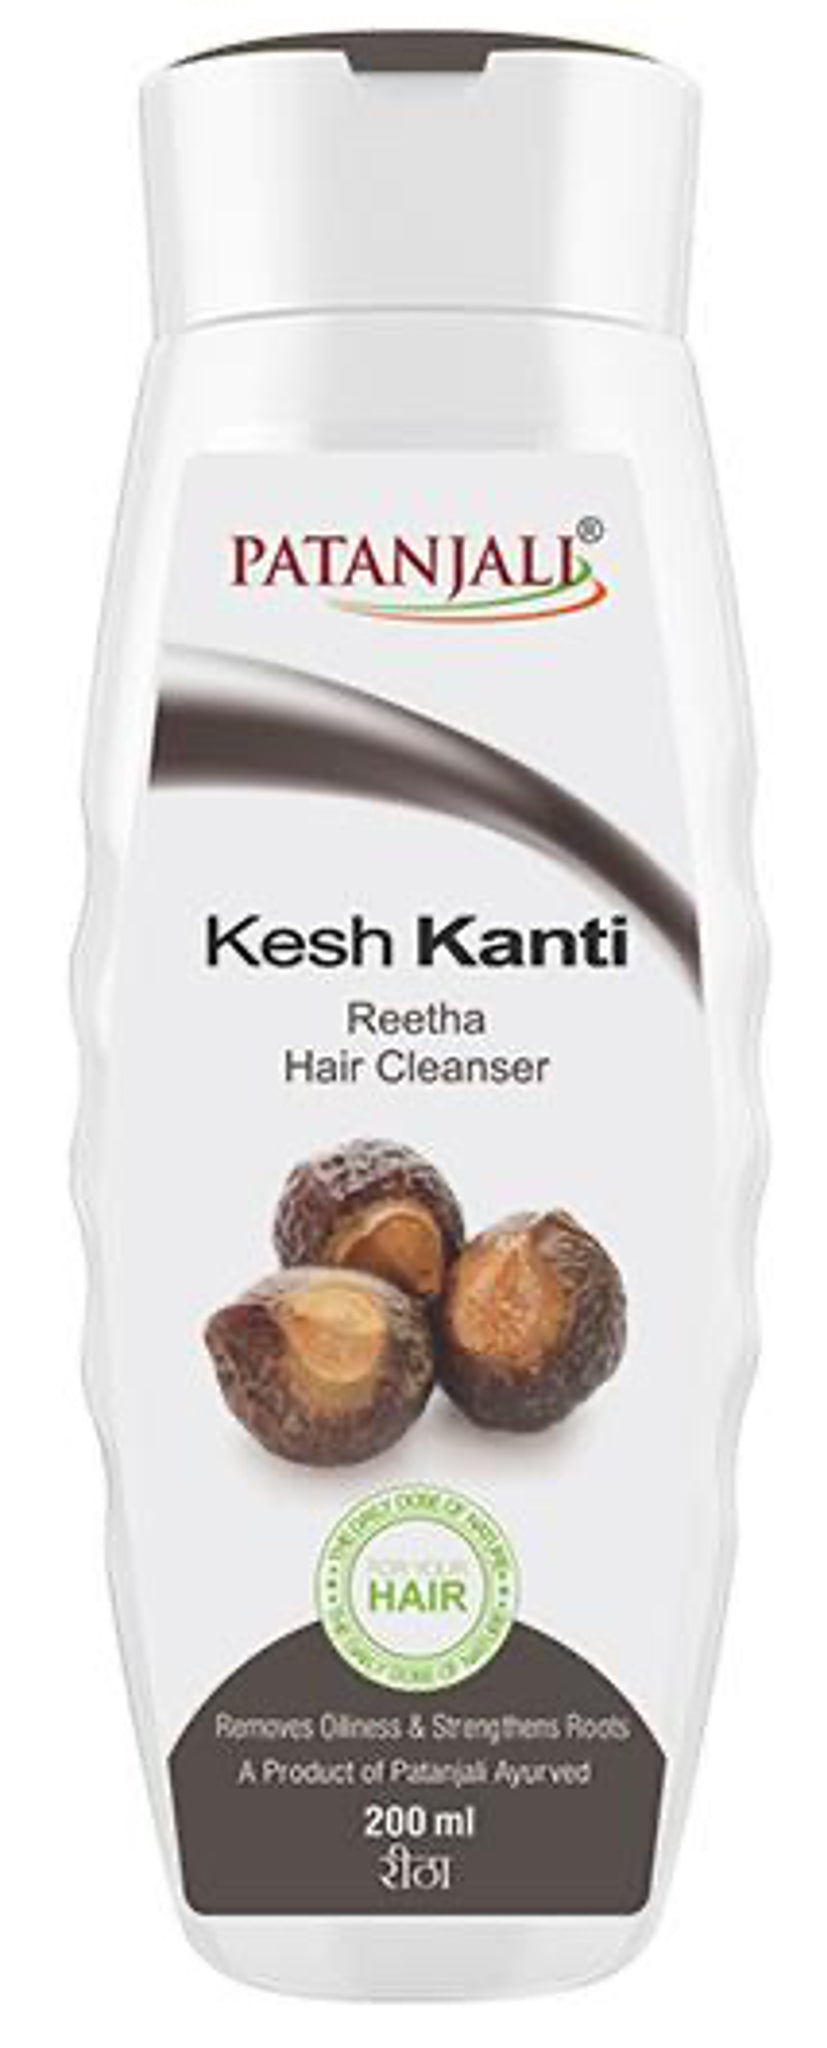 Kesh Kanti Reetha